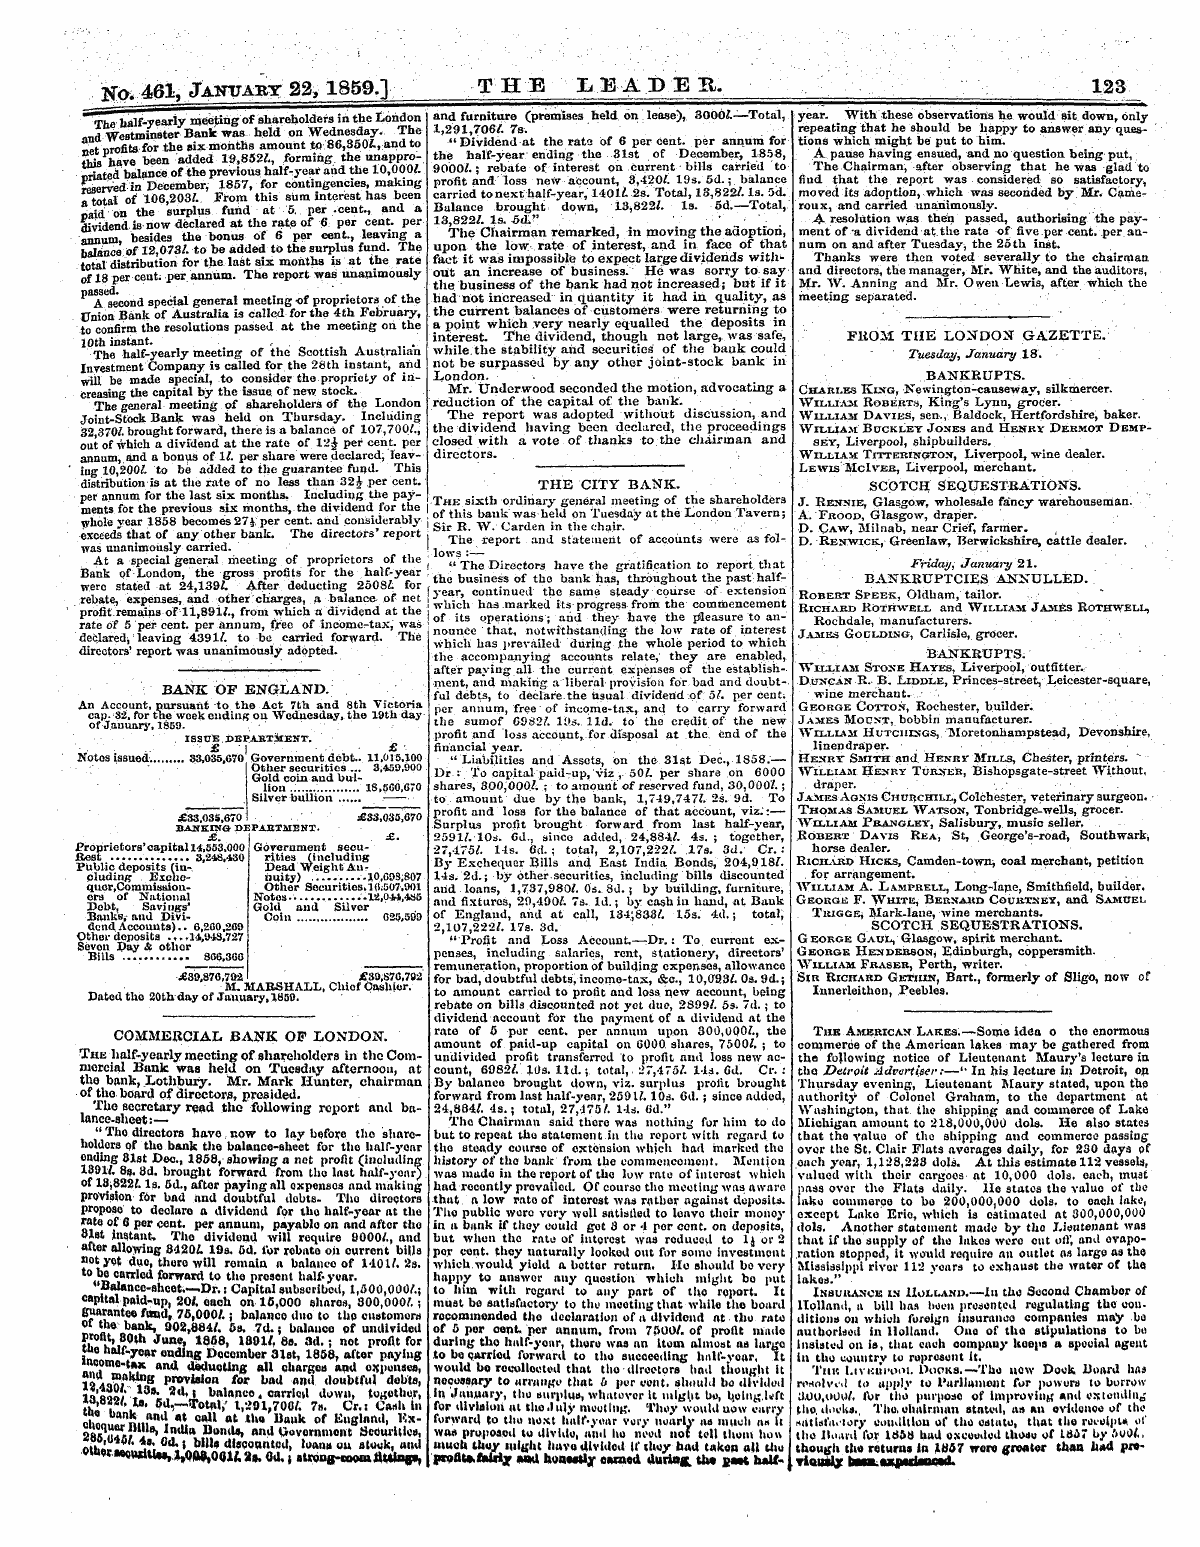 Leader (1850-1860): jS F Y, 2nd edition - Fkomtiie London Gazette. Tuesday, Januar...